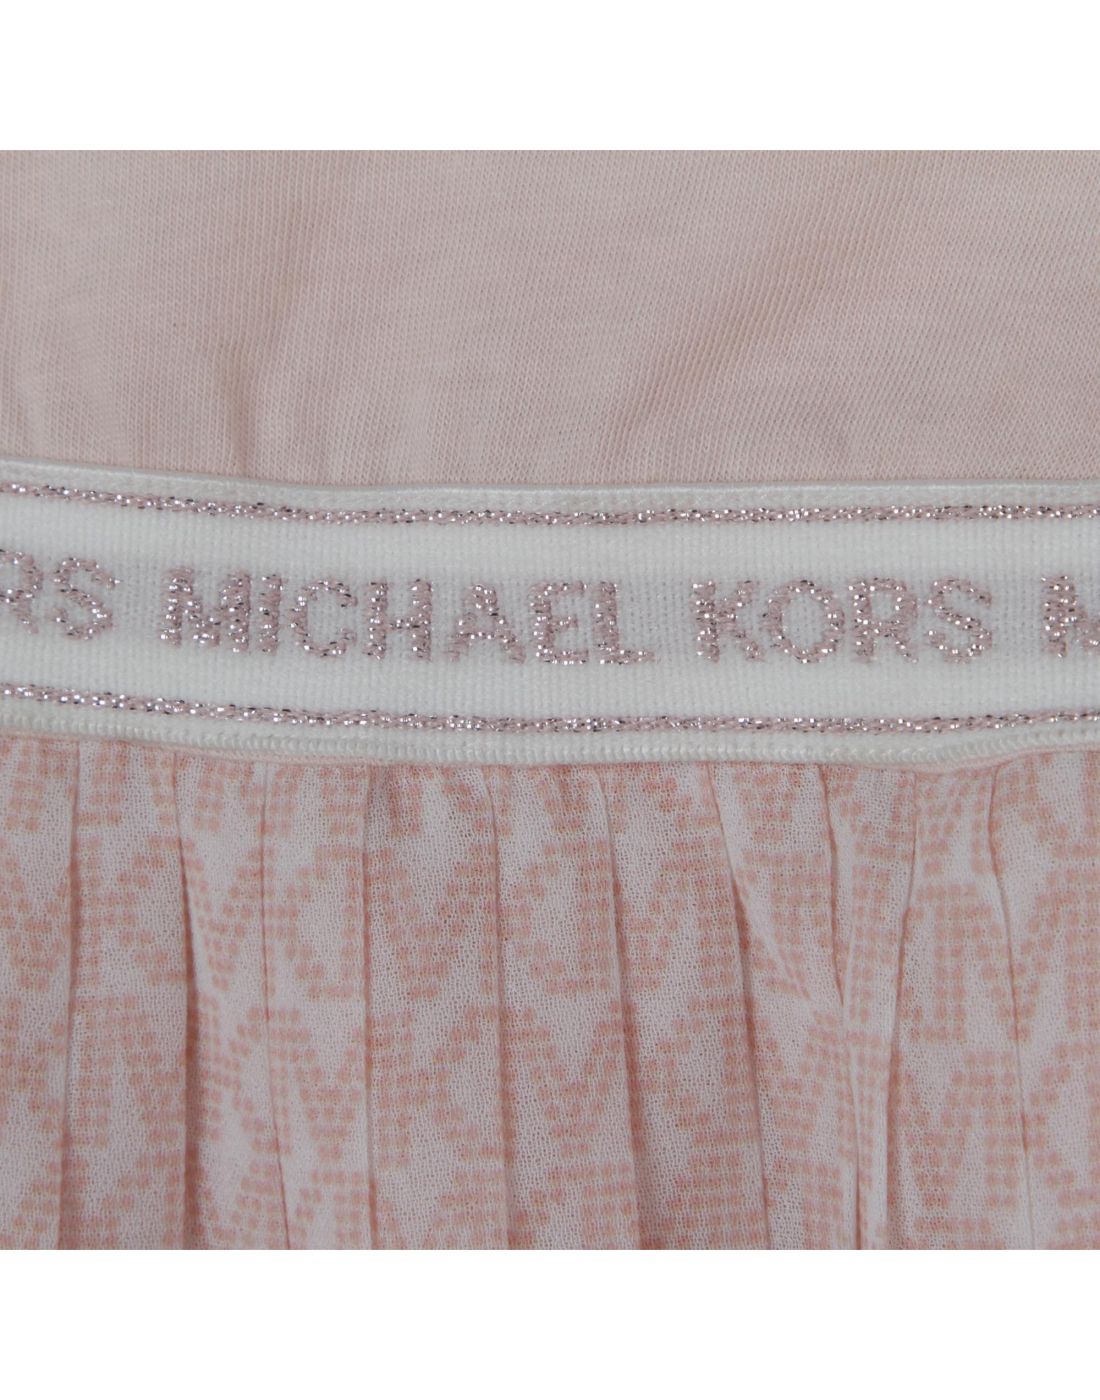 Michael Kors Girls Dress